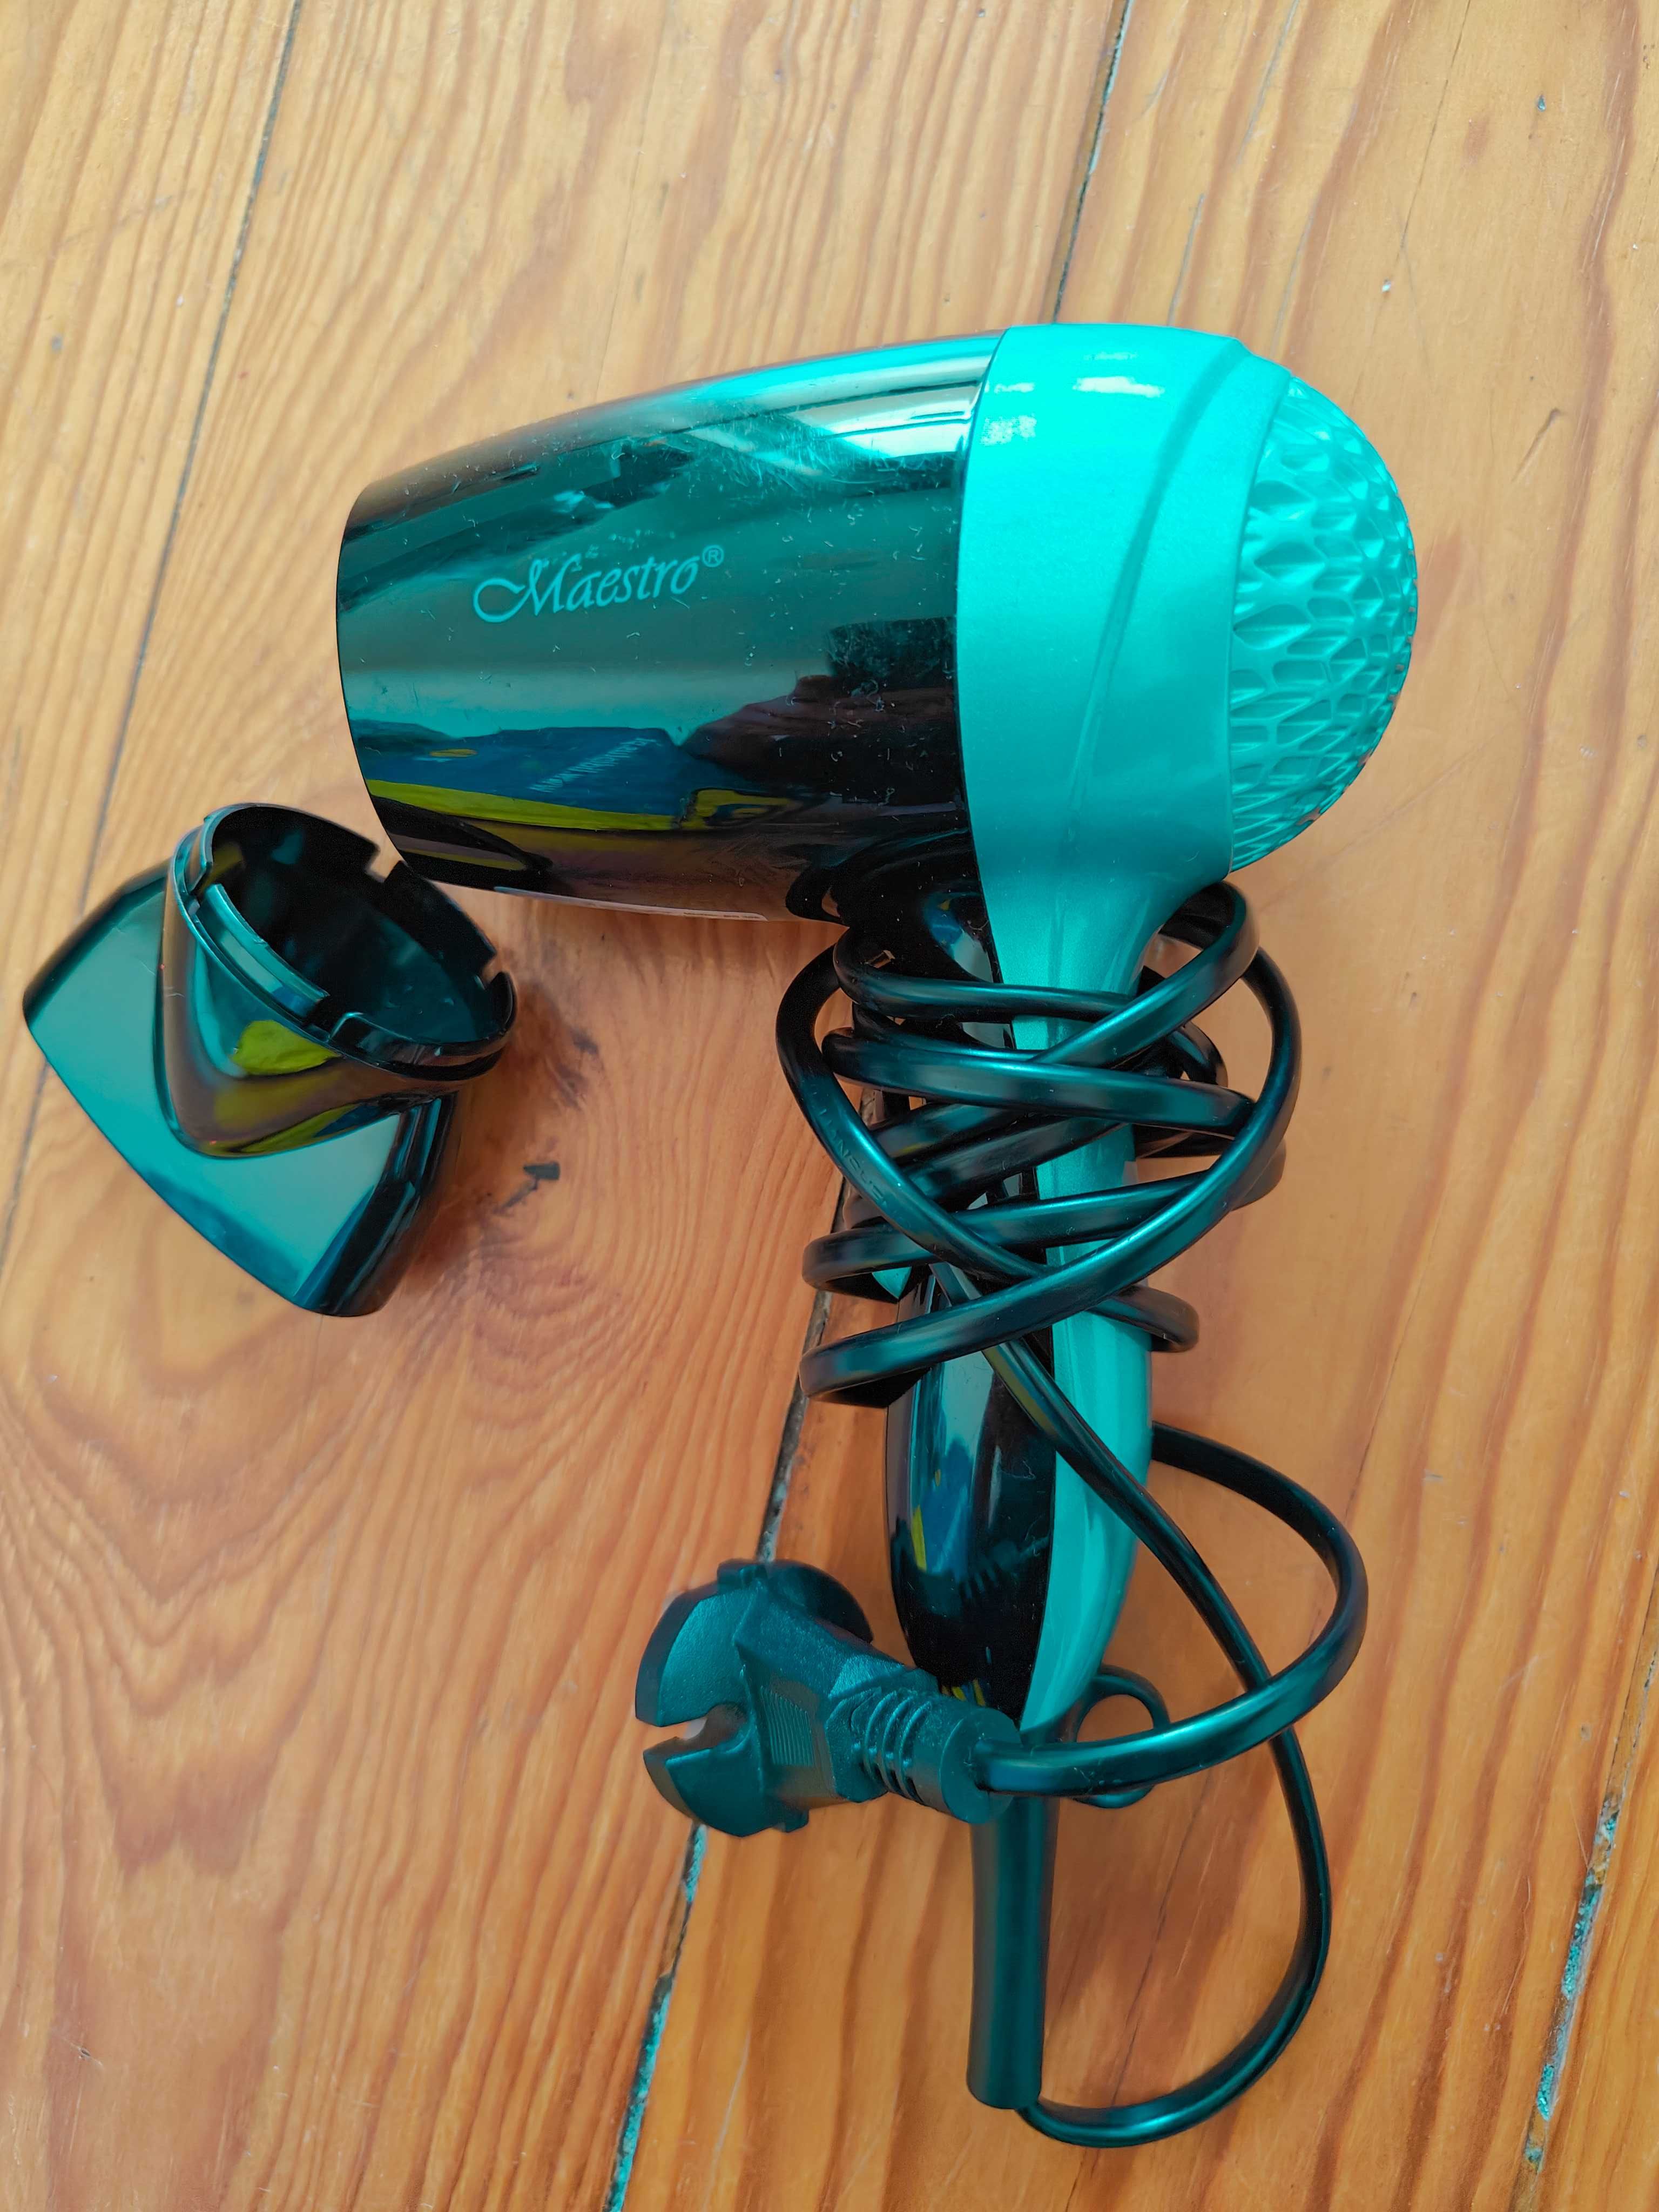 Hair dryer (Secador de cabelo)